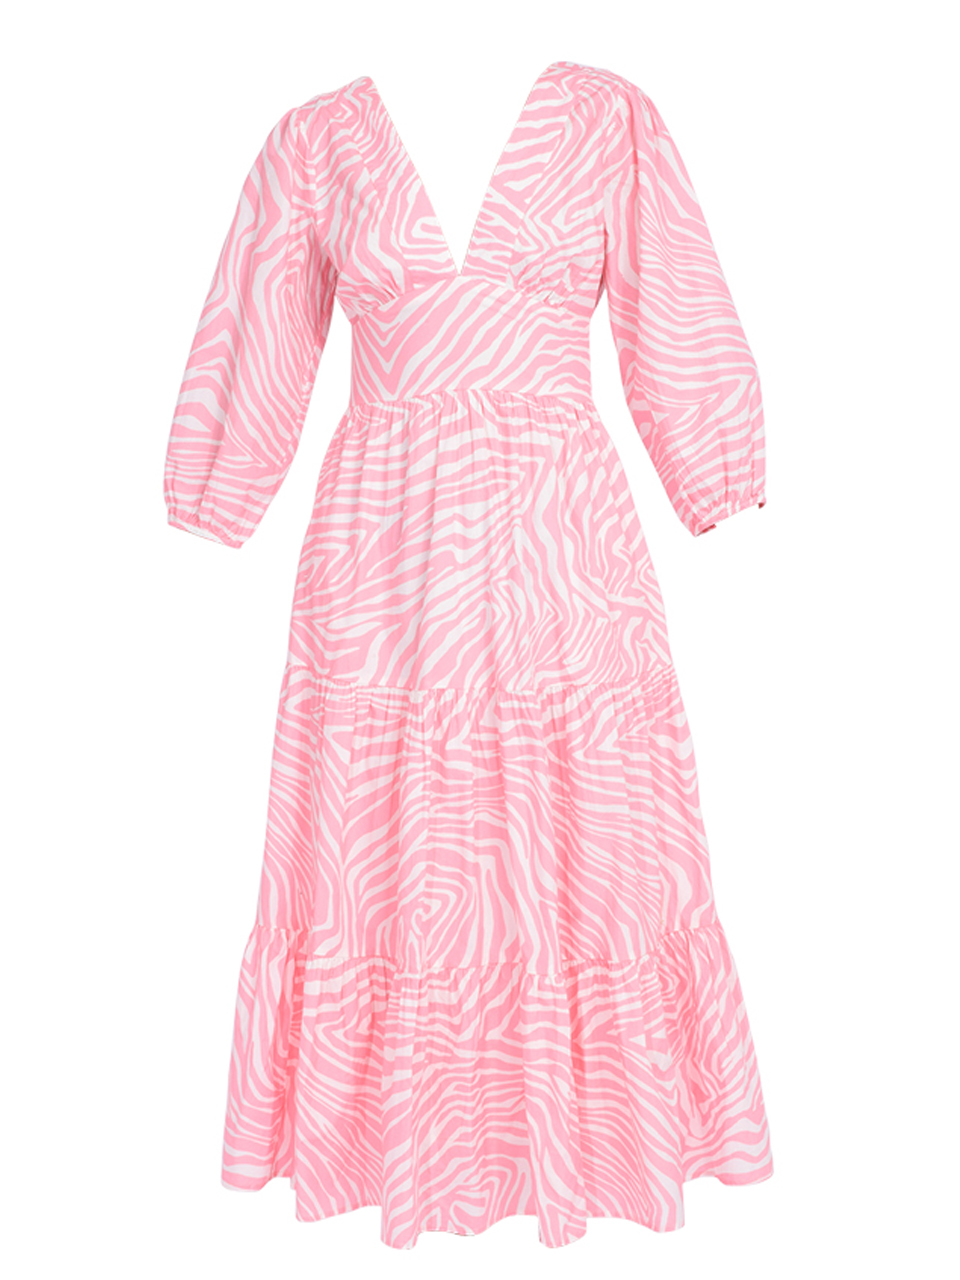 LOVE THE LABEL Elise Dress in Pink Zebra Alora Product Shot